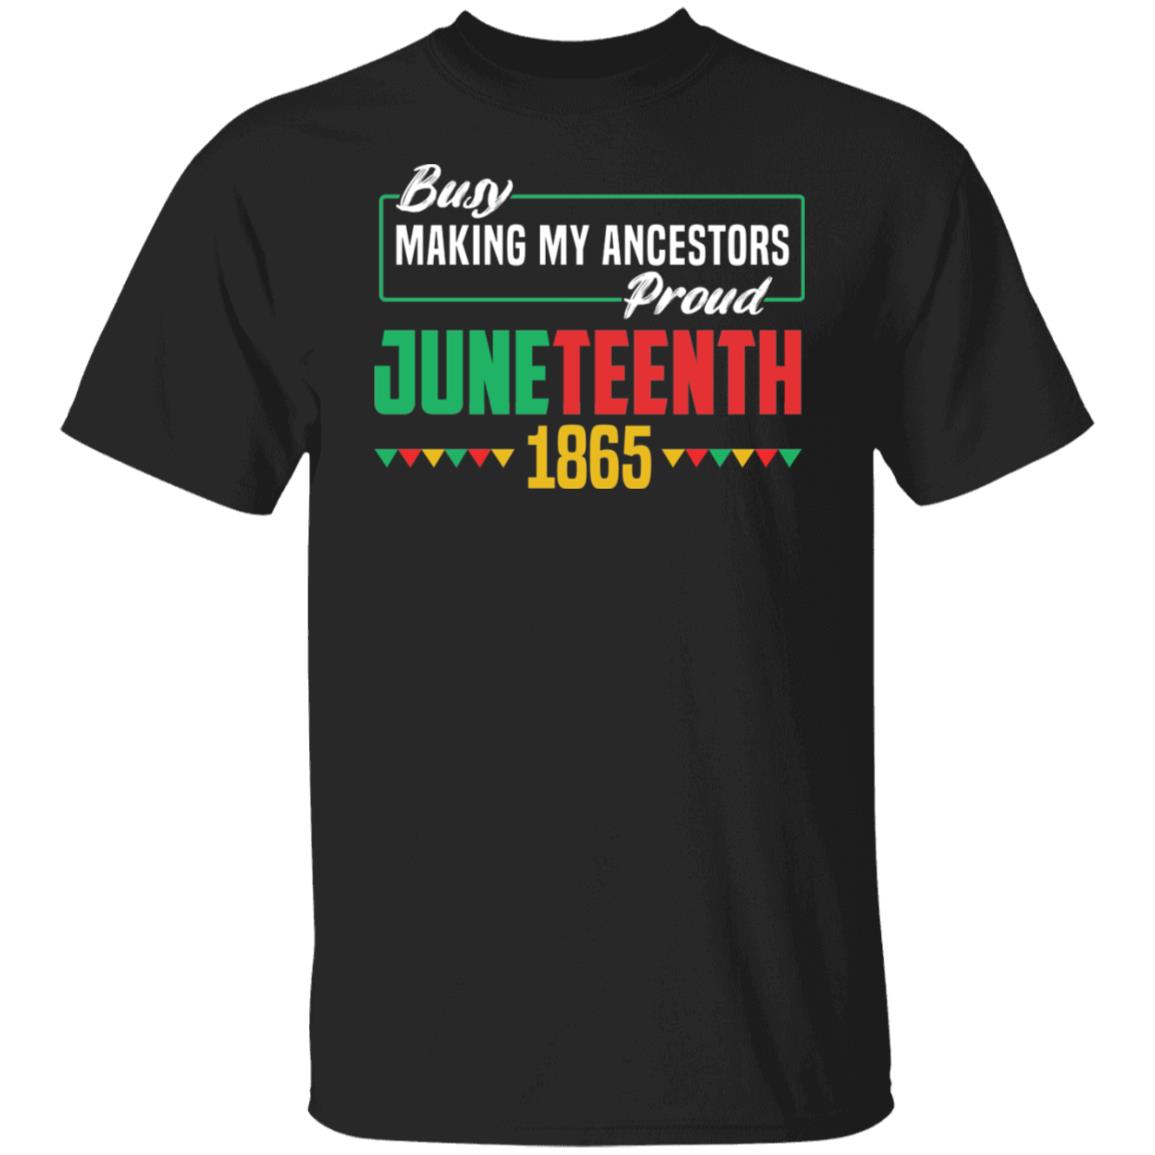 Busy Making My Ancestors Proud - Juneteenth T-shirt Apparel Gearment Unisex T-Shirt Black S